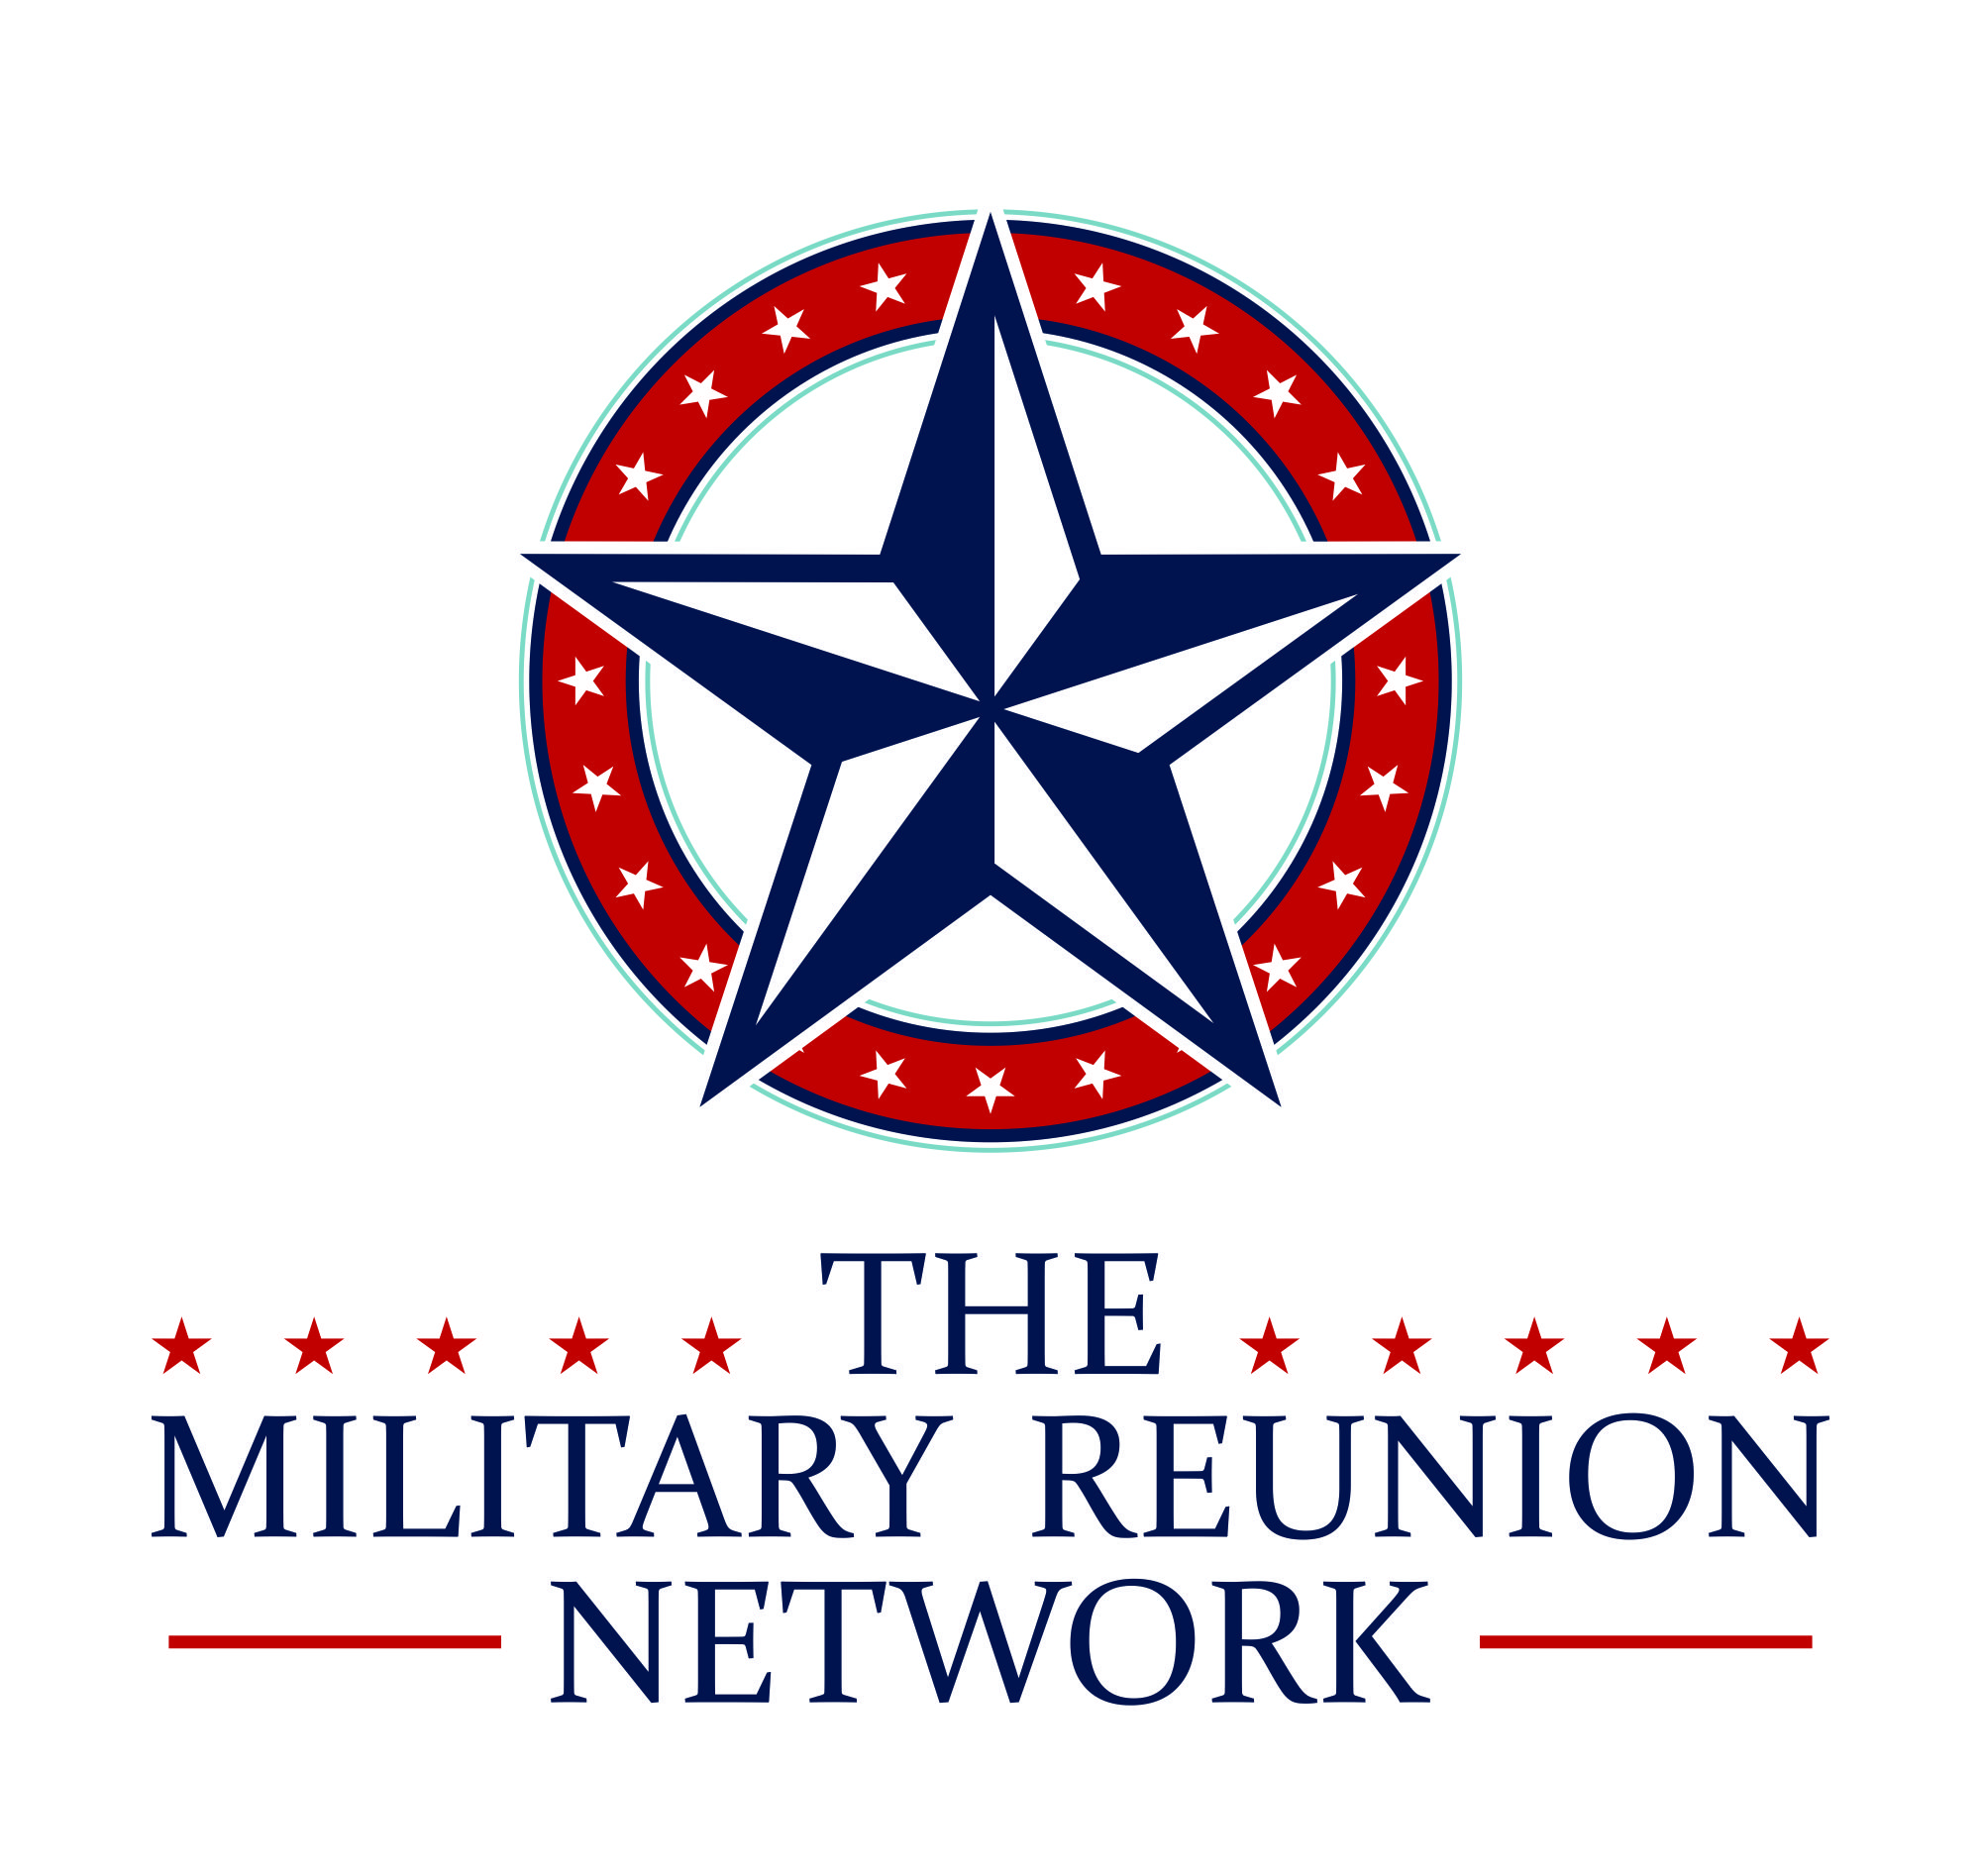 Military Reunion Network Logo